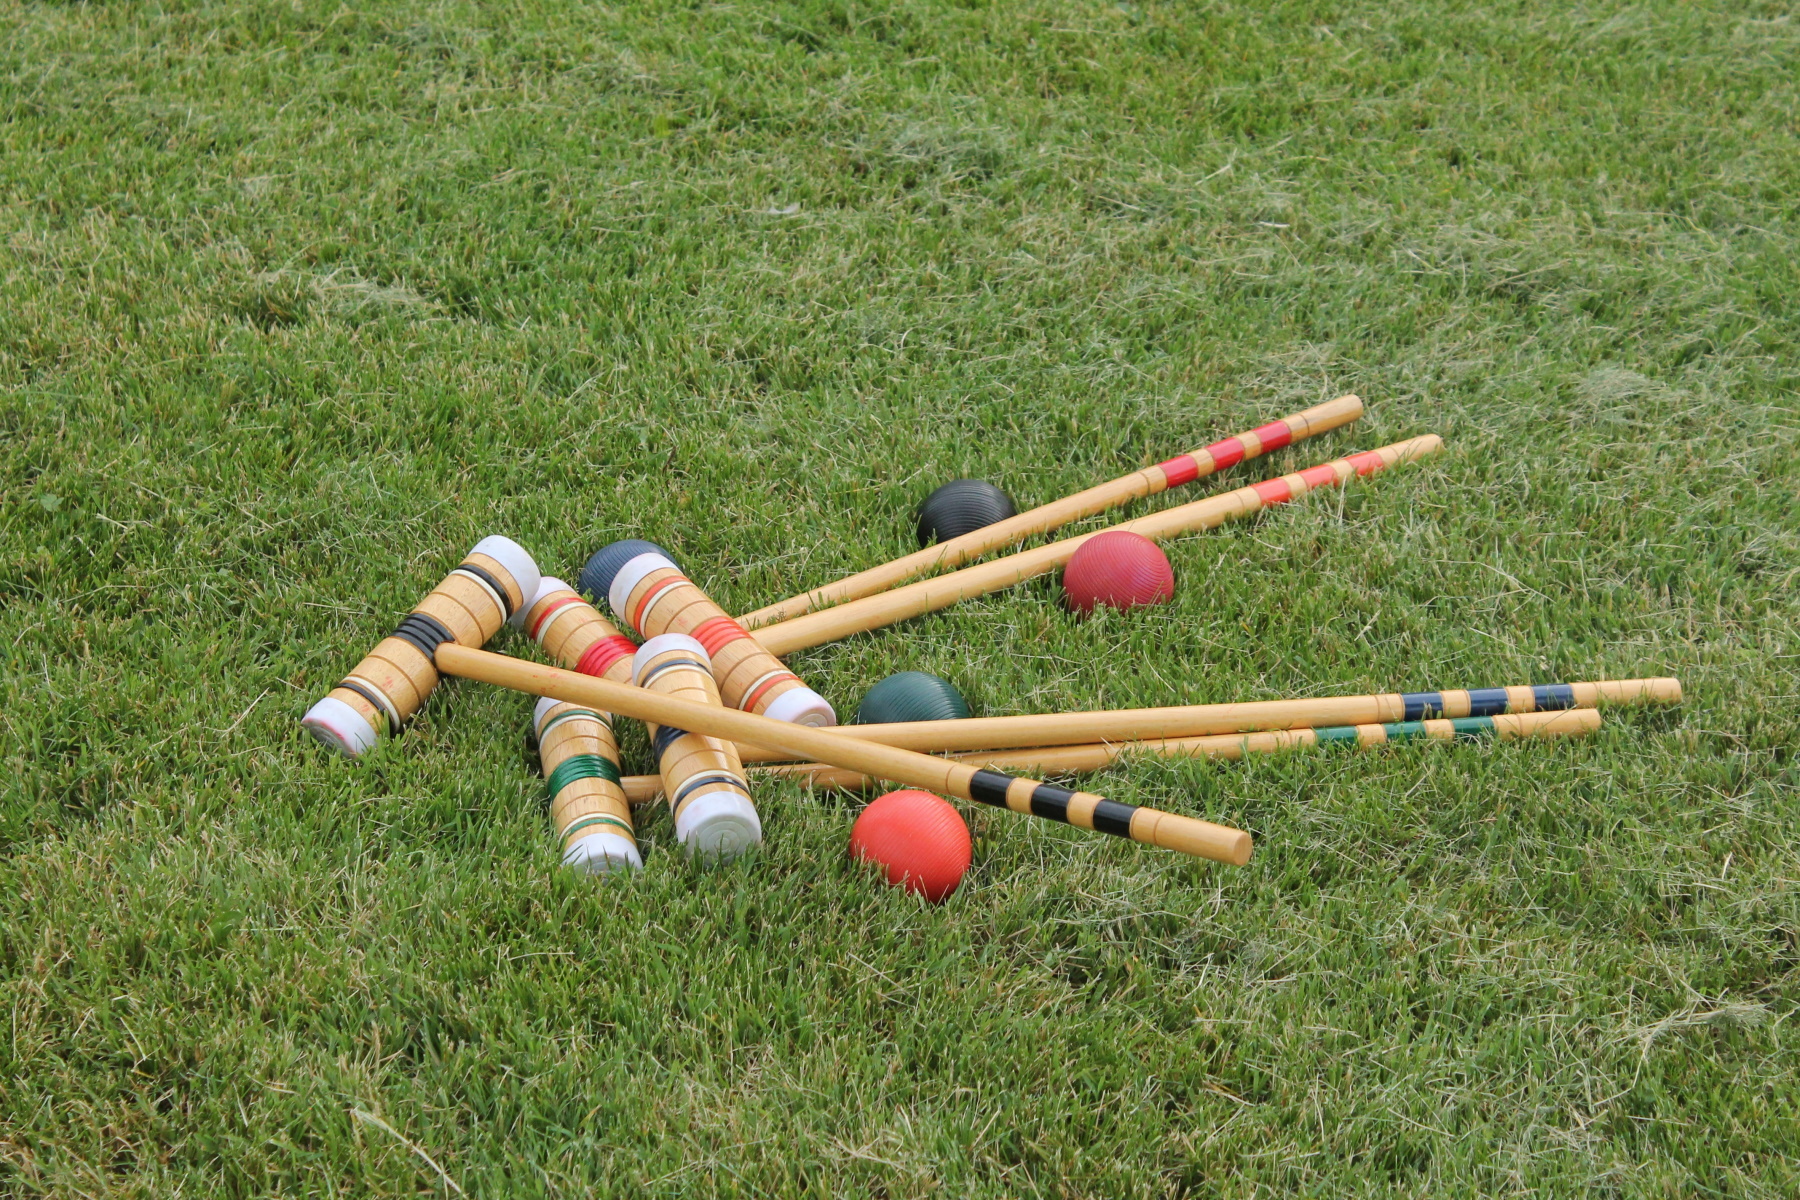 A croquet set on lush grass highlights the fun games at the Rams Head Inn, Shelter Island.